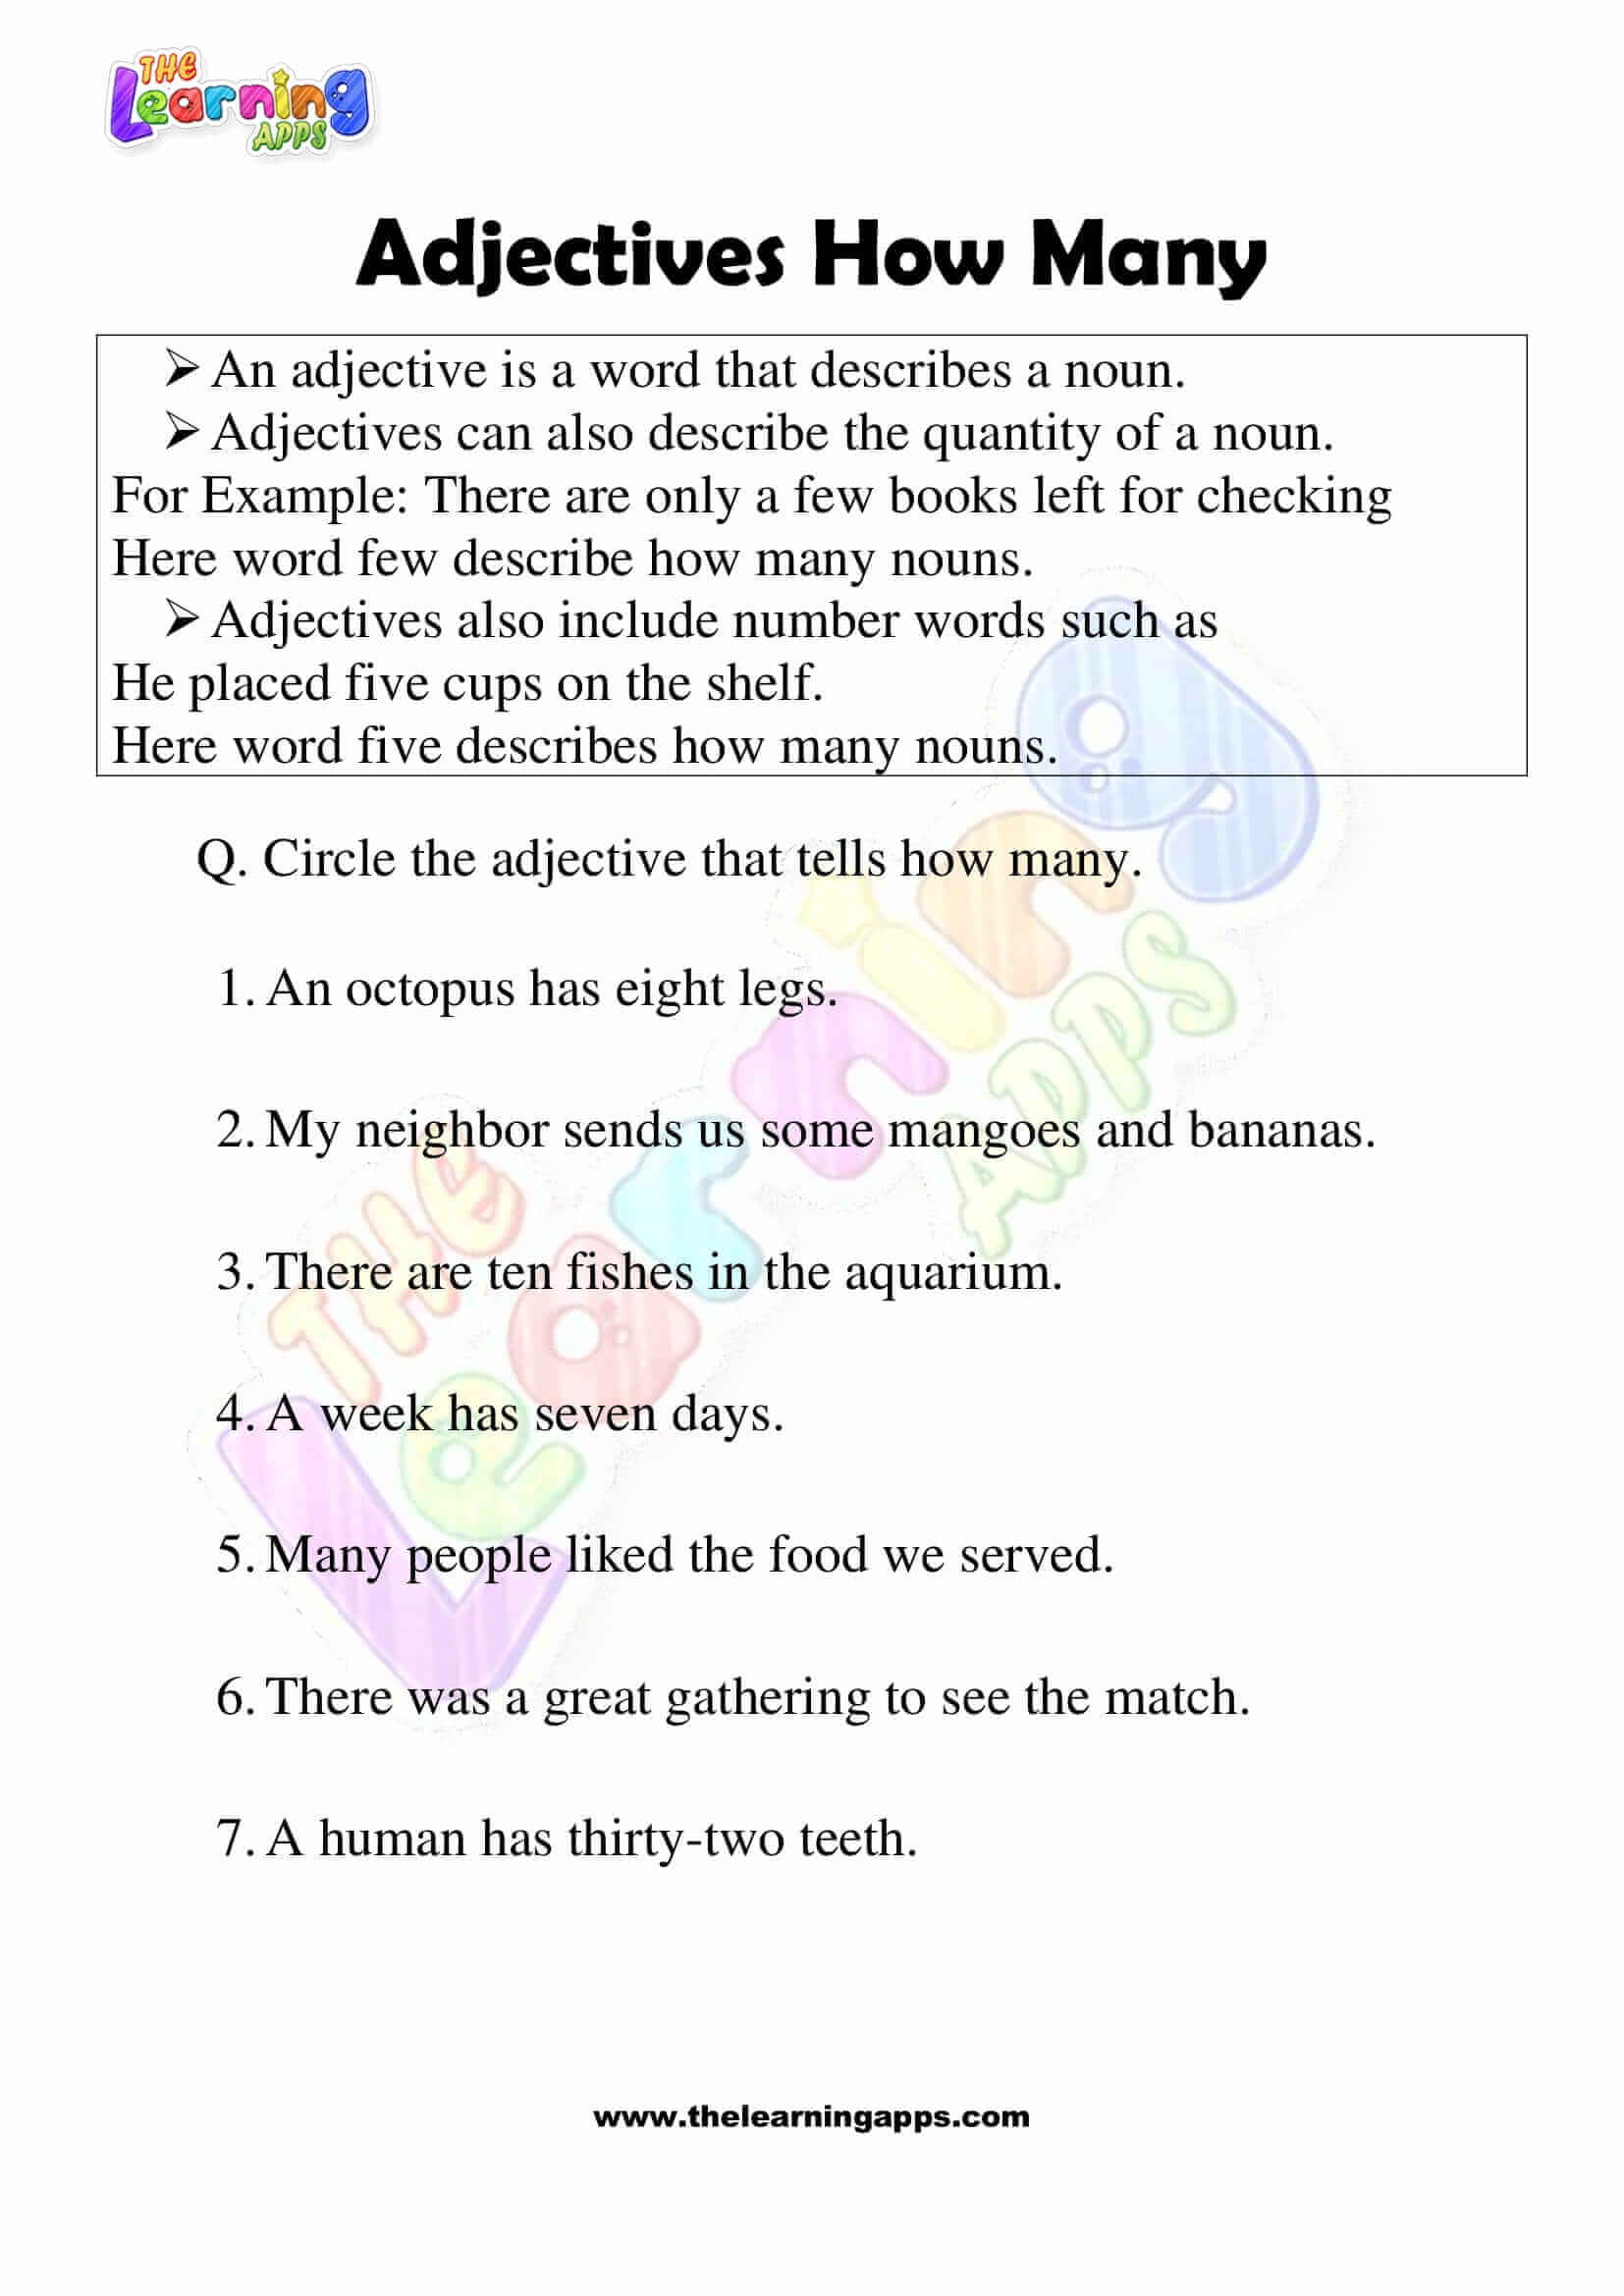 Adjectives-How-Many-Worksheets-Grade-3-Activity-2